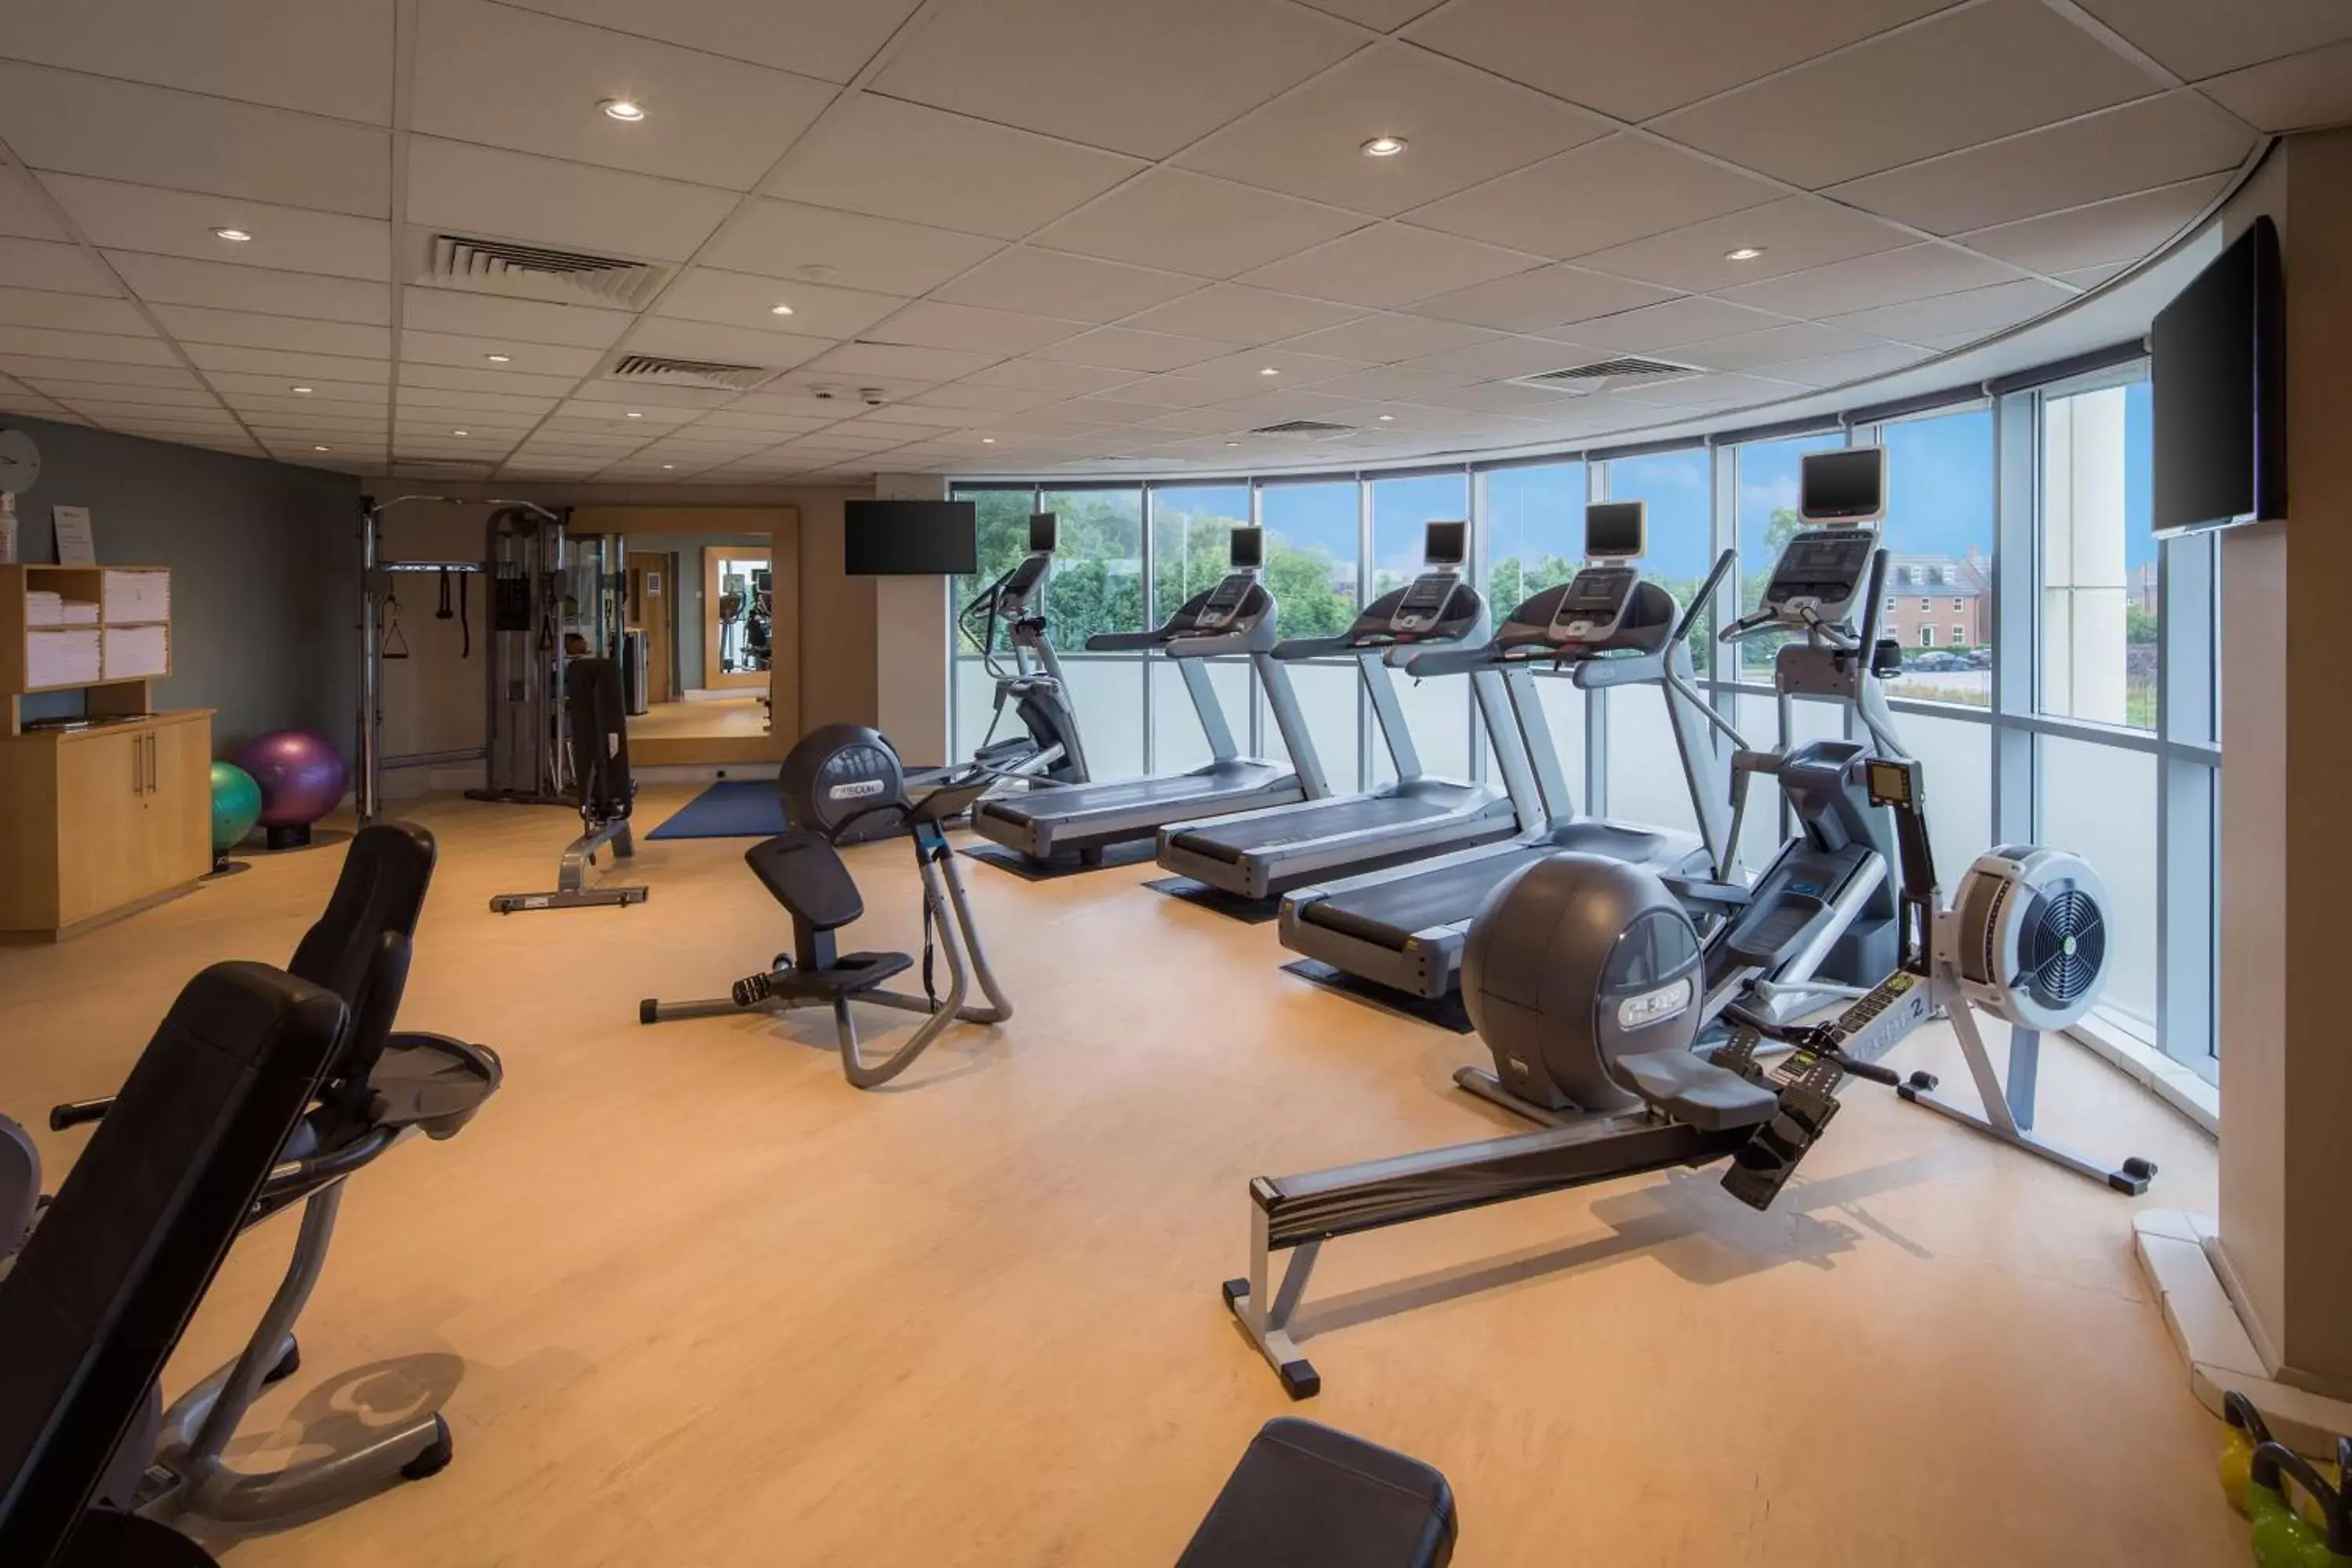 Fitness centre/facilities, Fitness Center/Facilities in Hilton Garden Inn Luton North